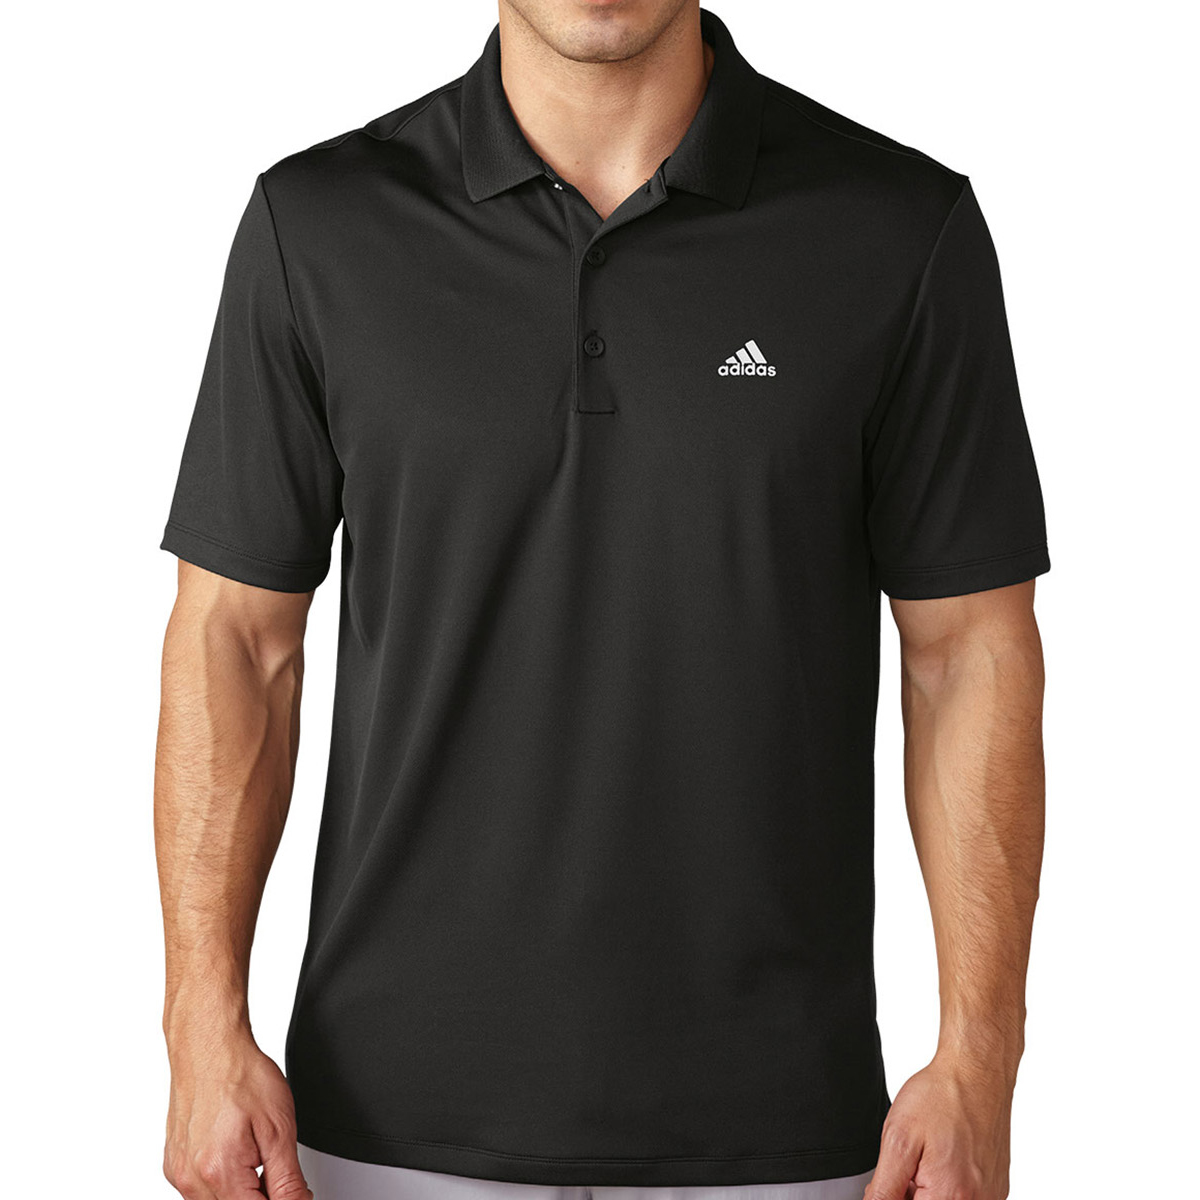 adidas Golf Performance Polo Shirt 